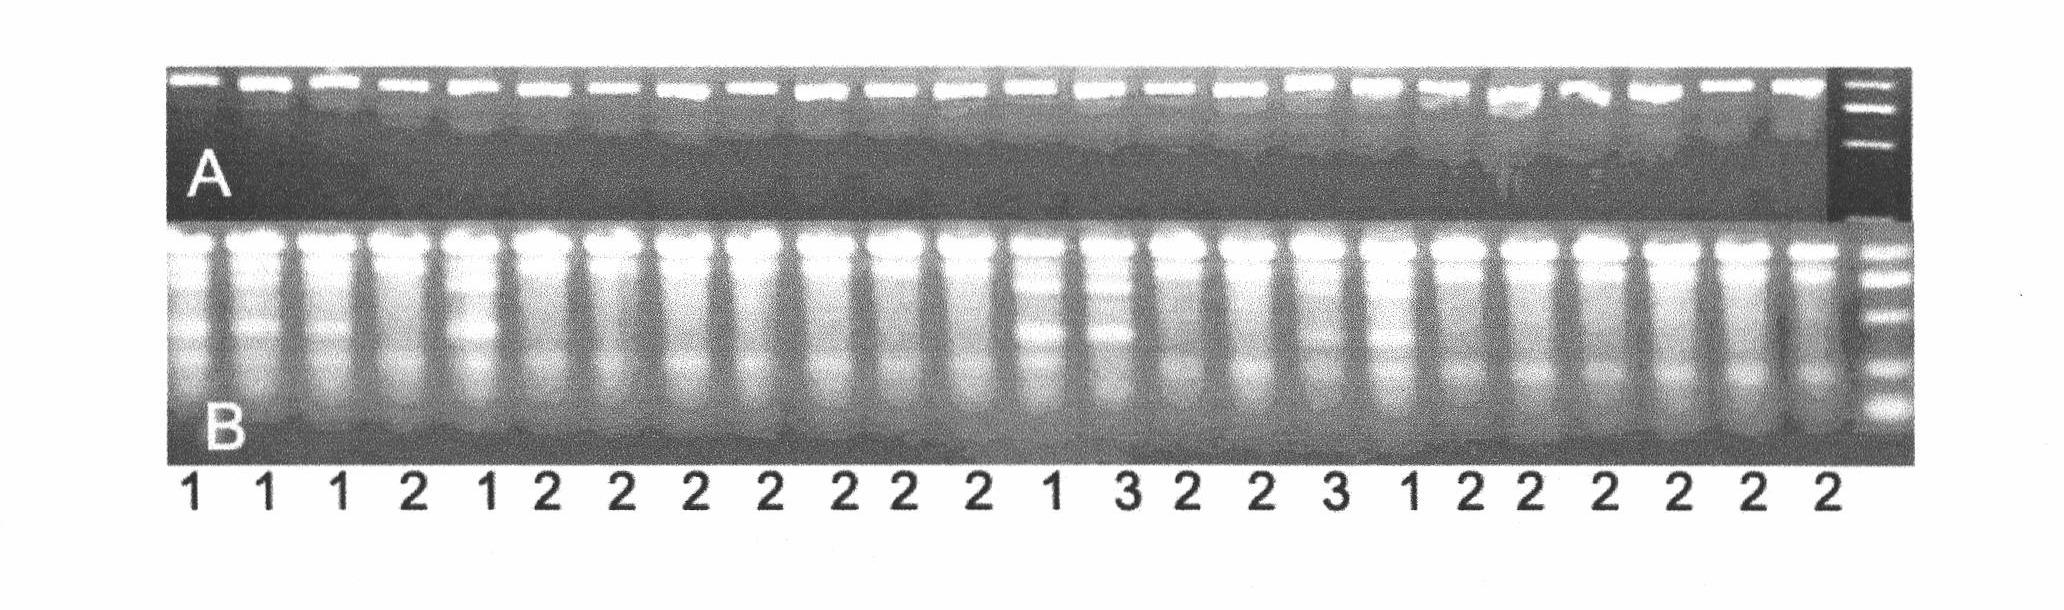 Method for cloning rice complex trait associated gene